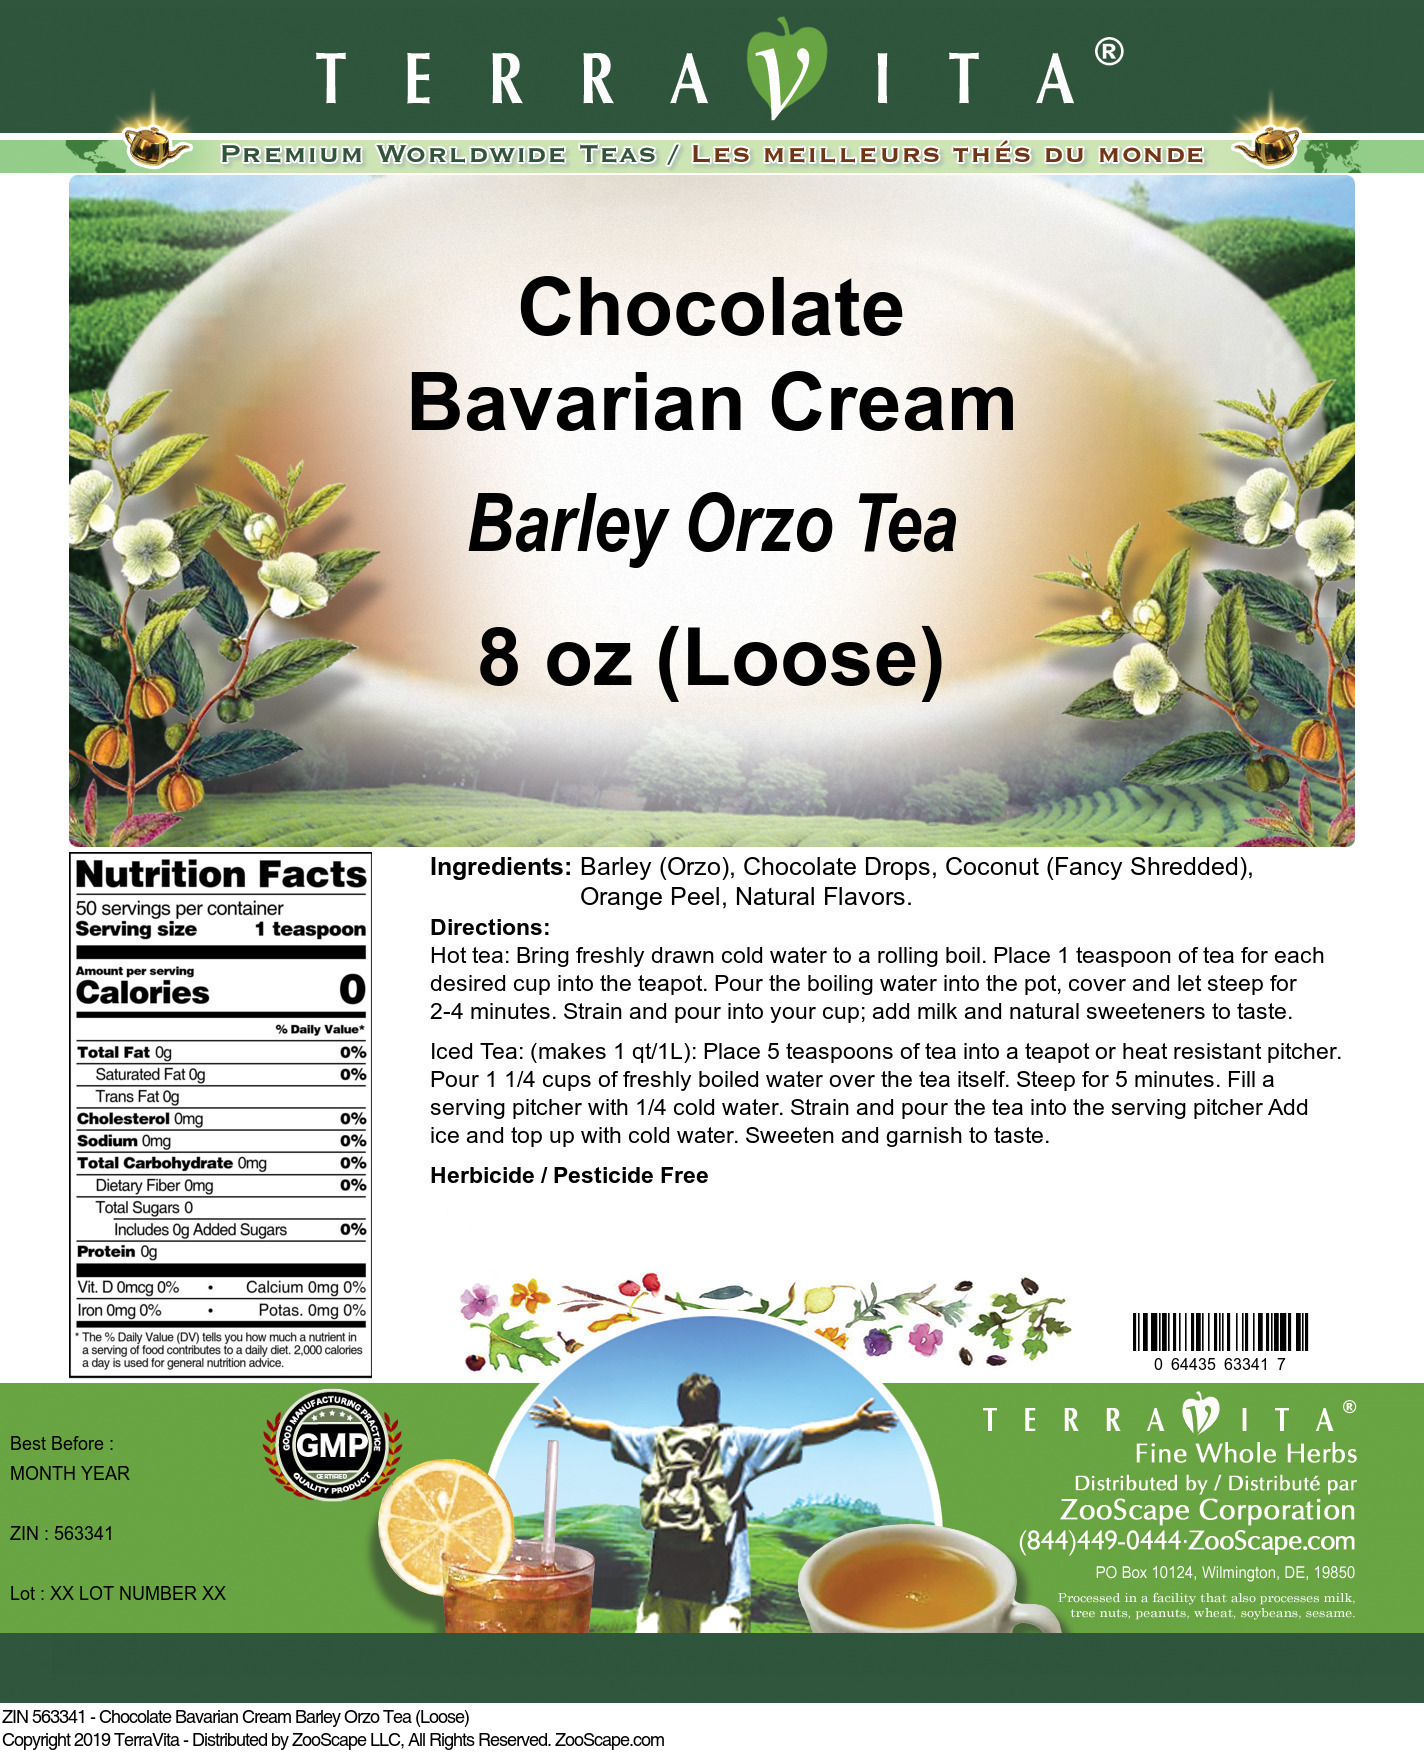 Chocolate Bavarian Cream Barley Orzo Tea (Loose) - Label